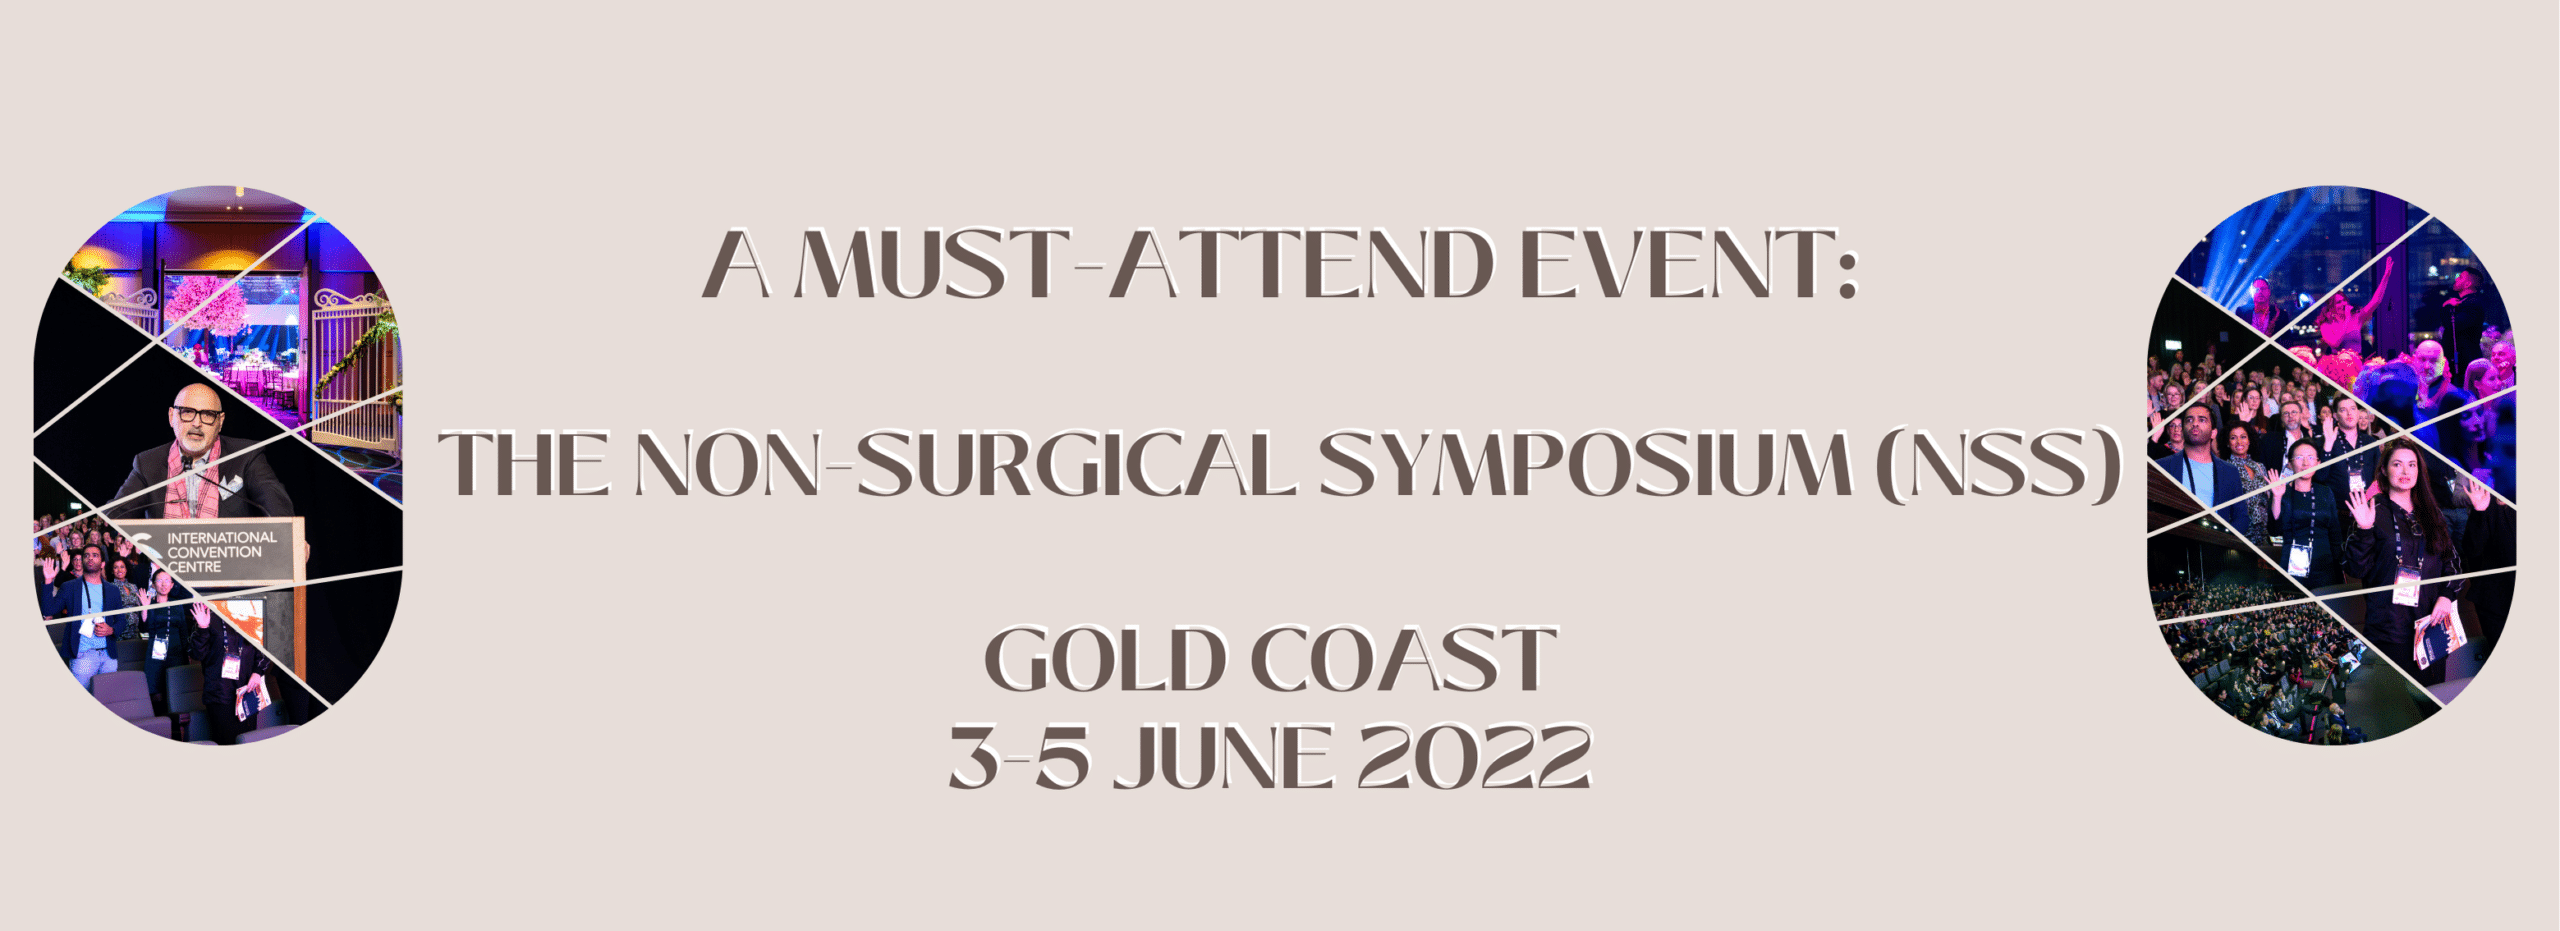 Non Surgical Symposium Gold Coast 2022